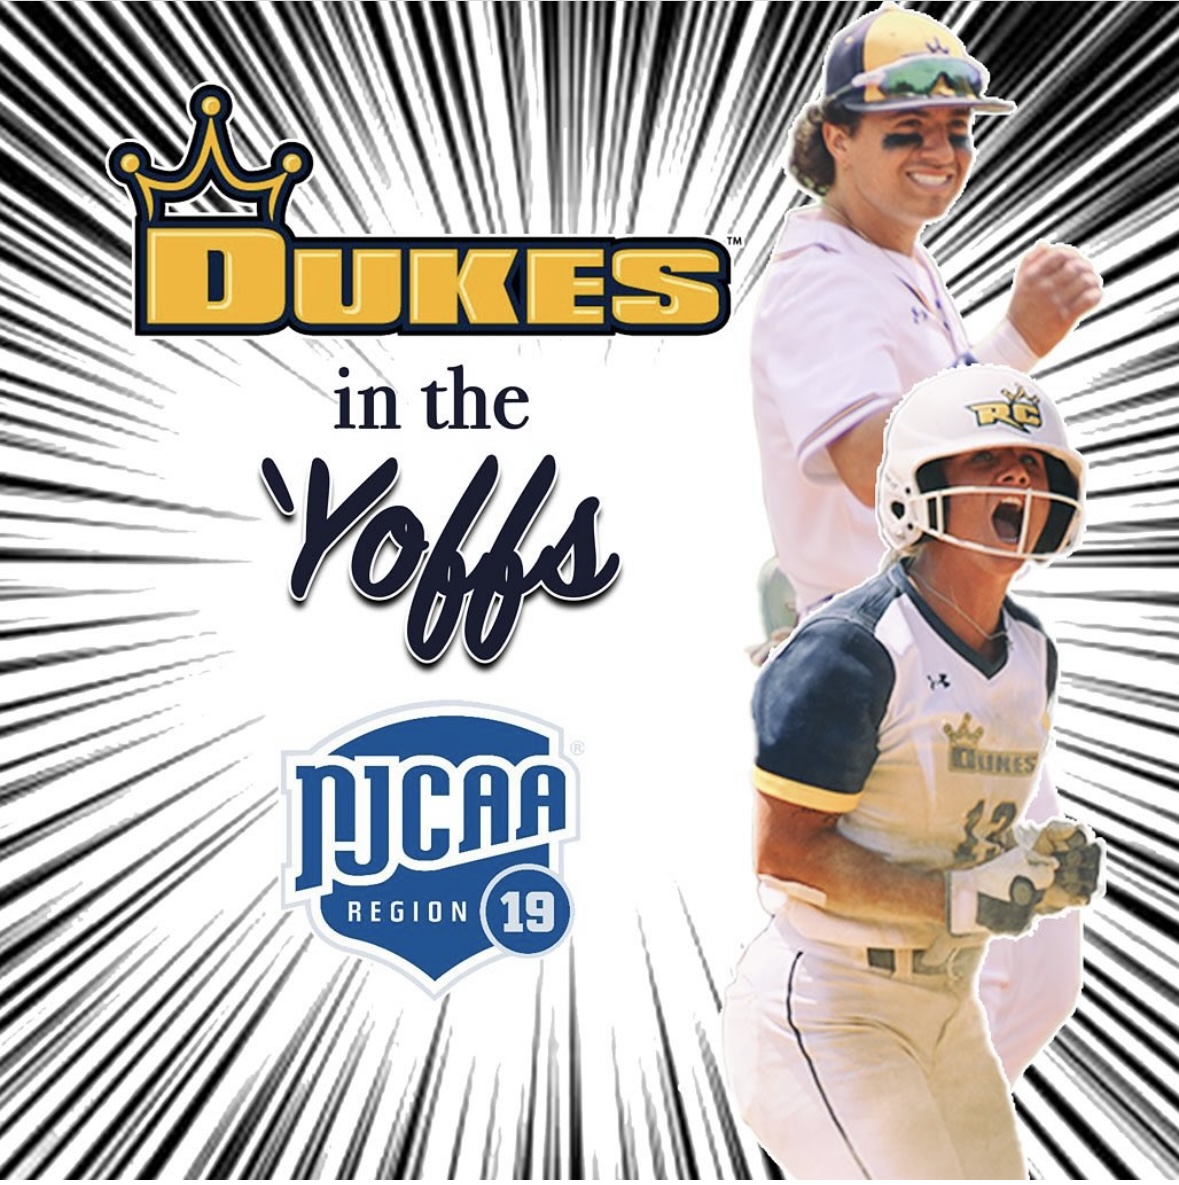 Dukes Baseball and Softball ready for Region XIX playoff run